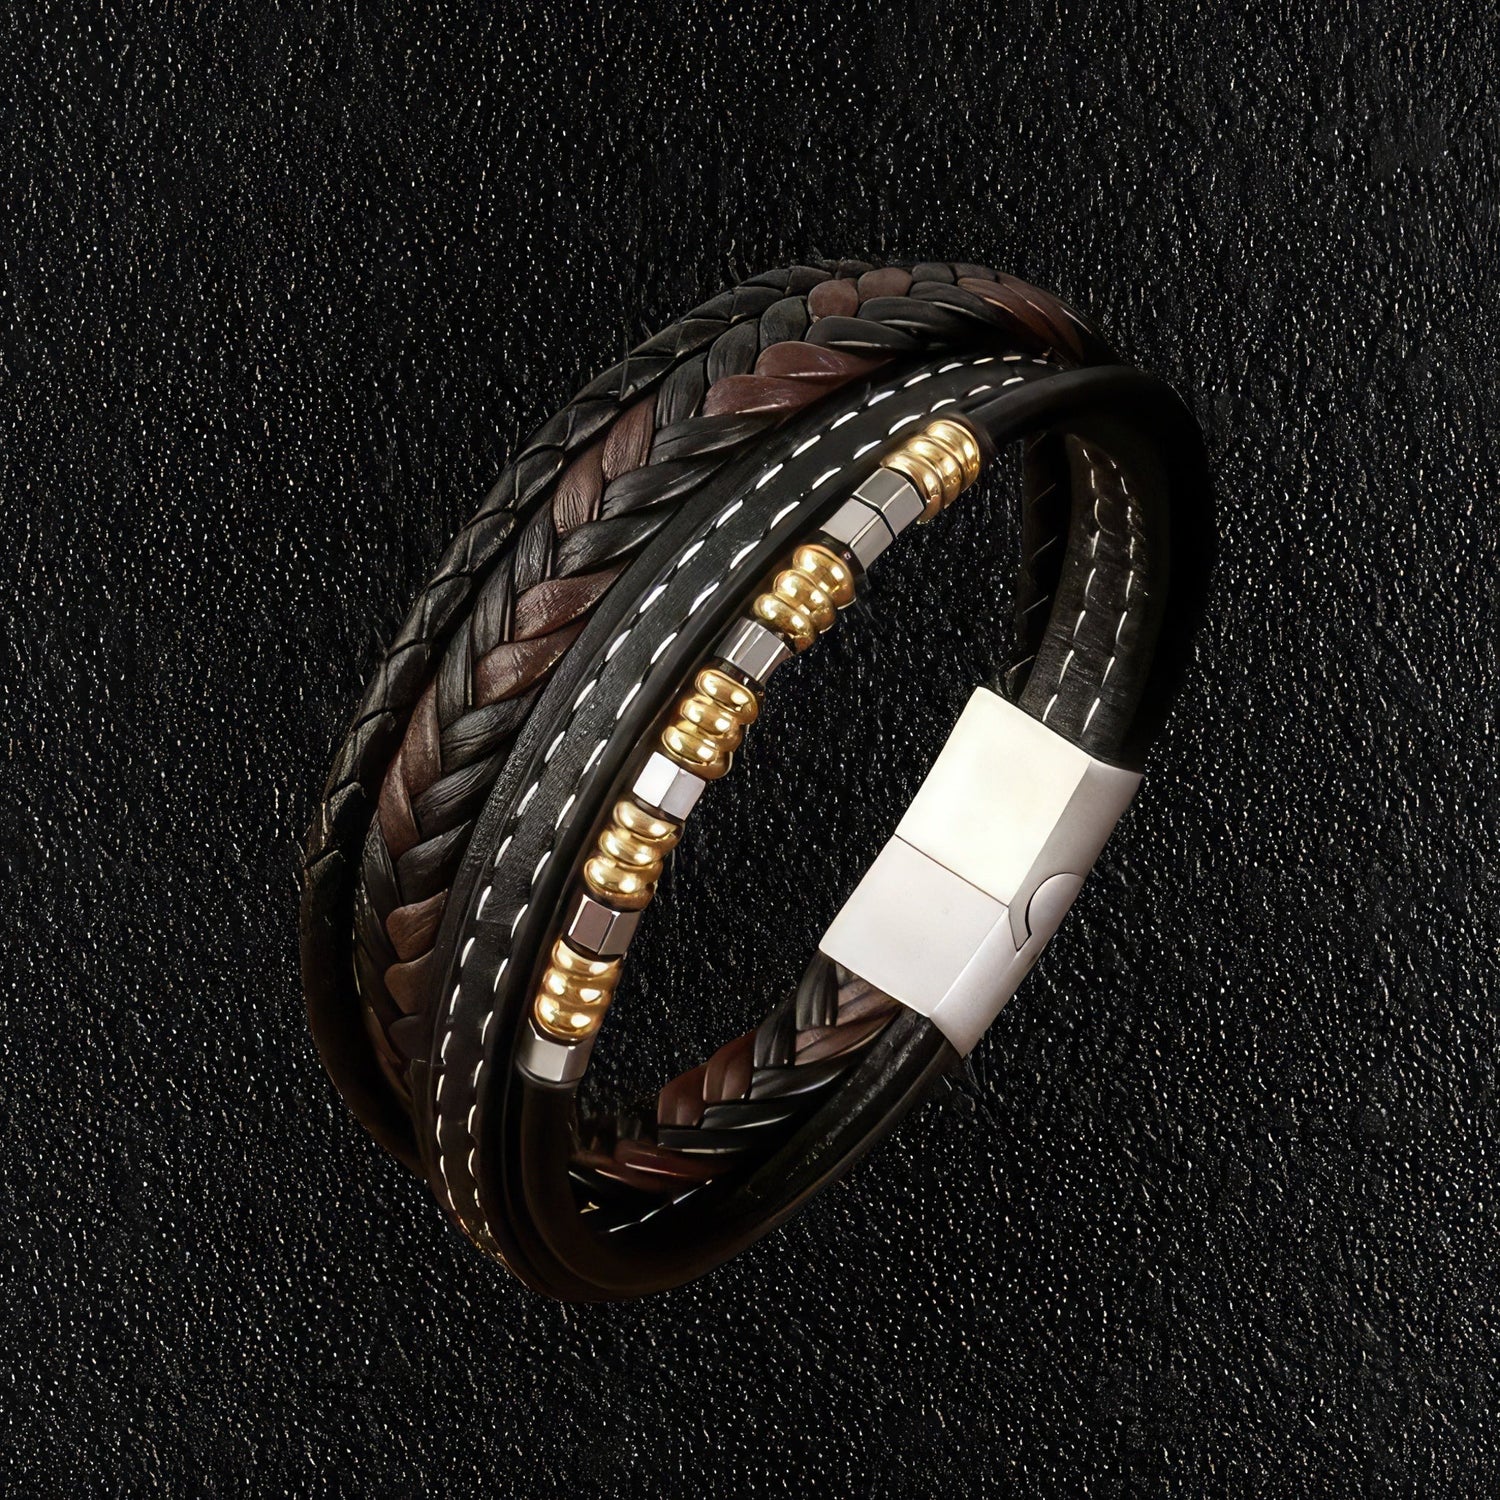 4 Styles in 1 Leather Bracelet - Brown